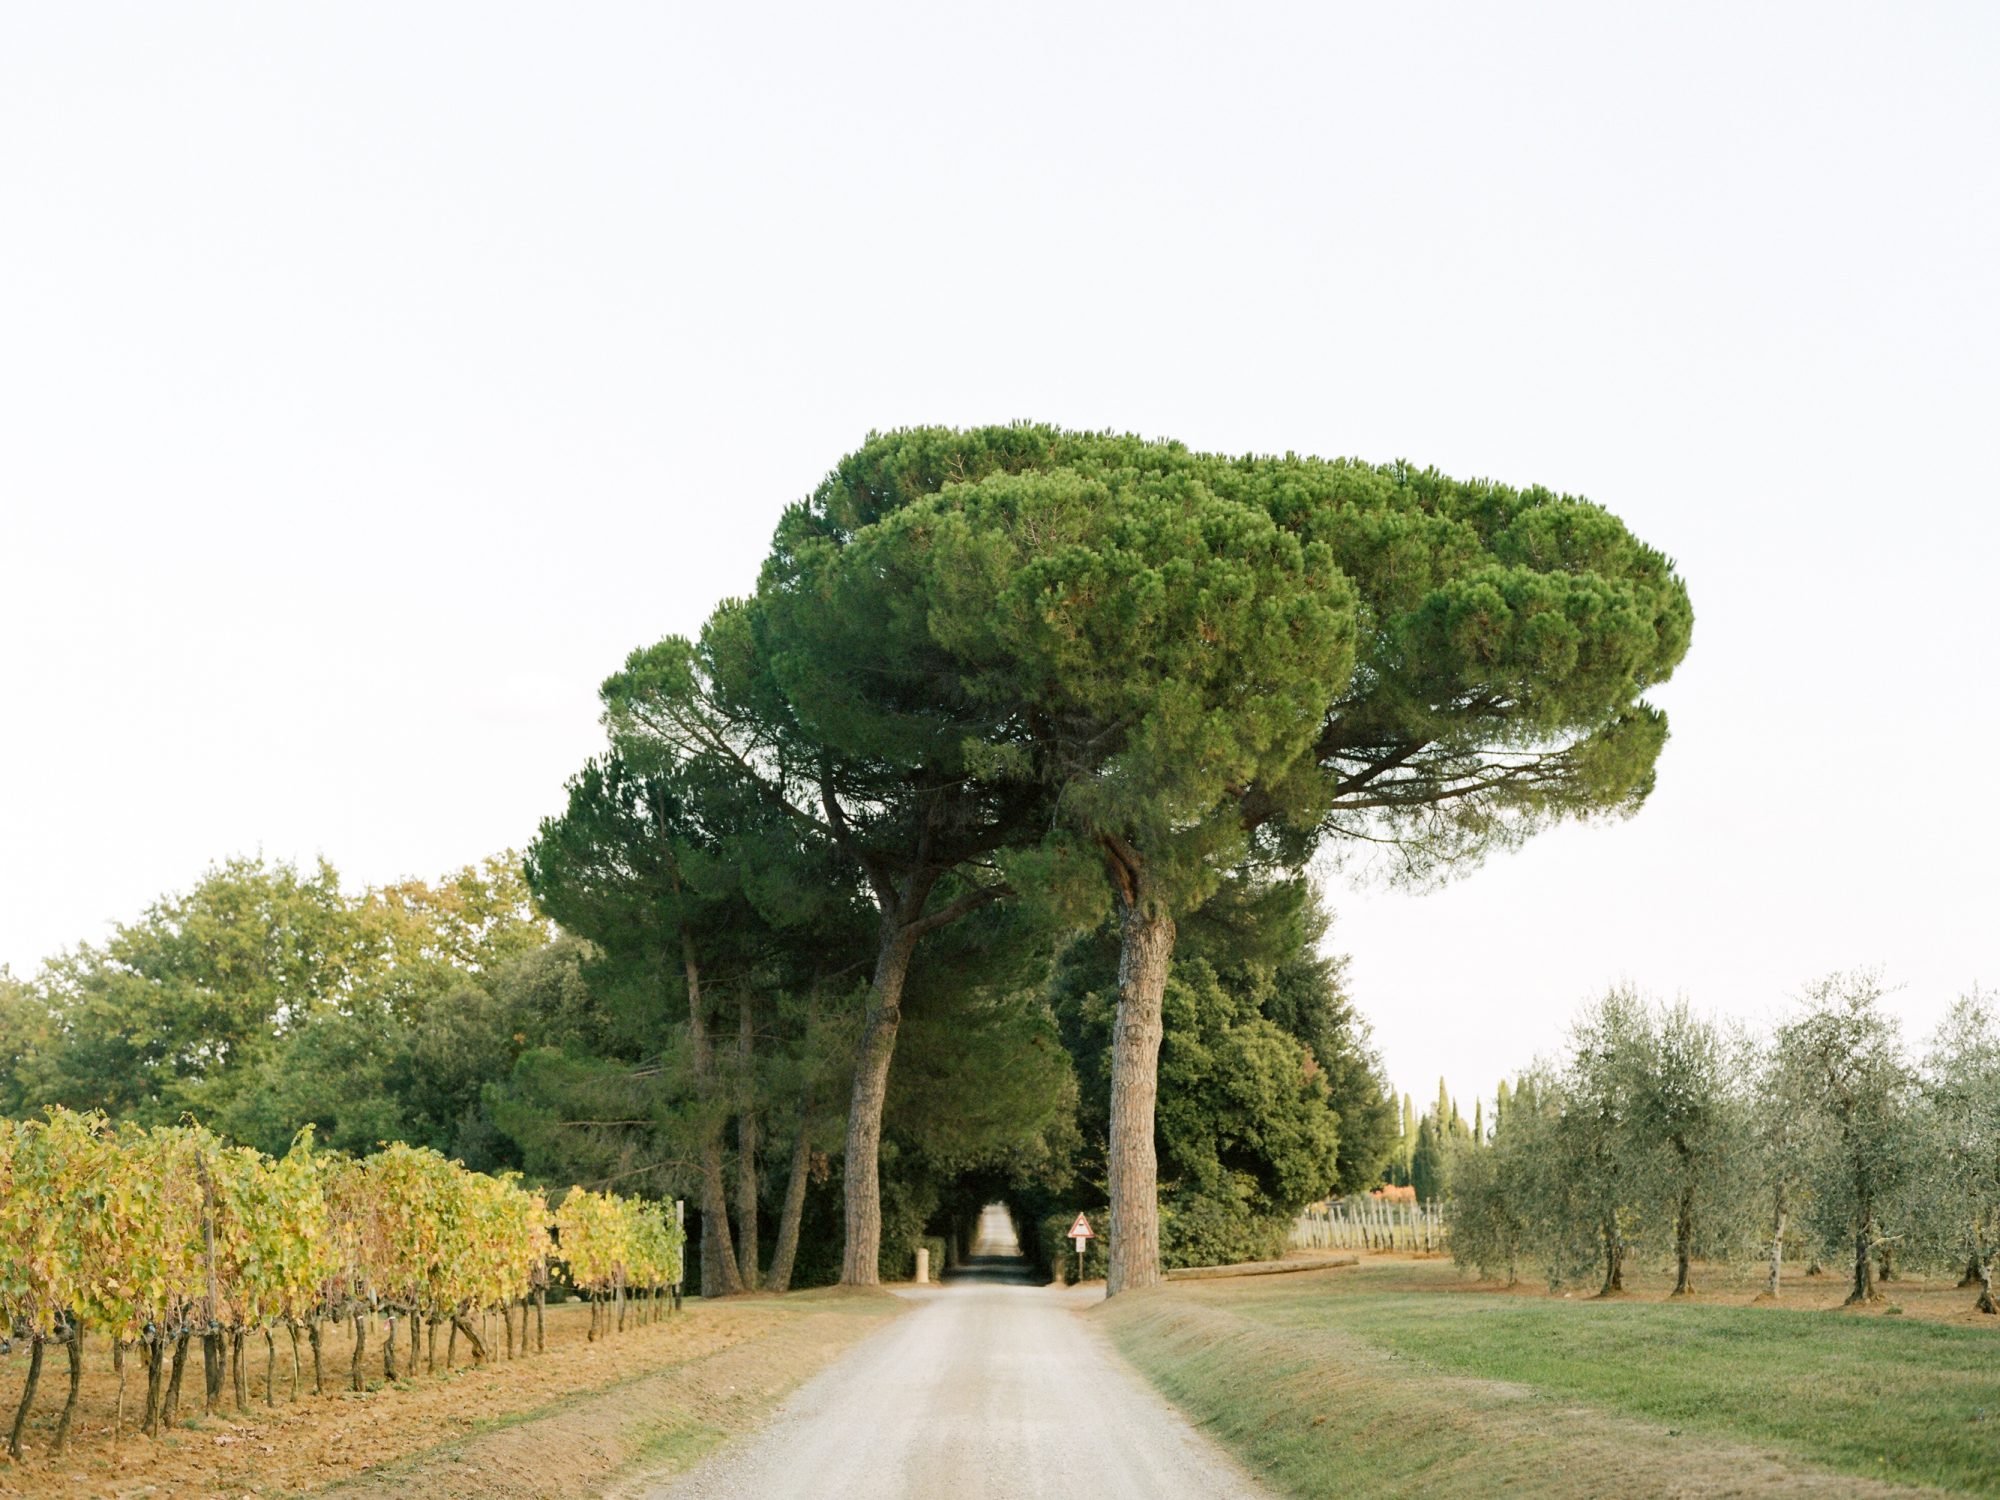 Tuscany. Photo by Rachel Havel